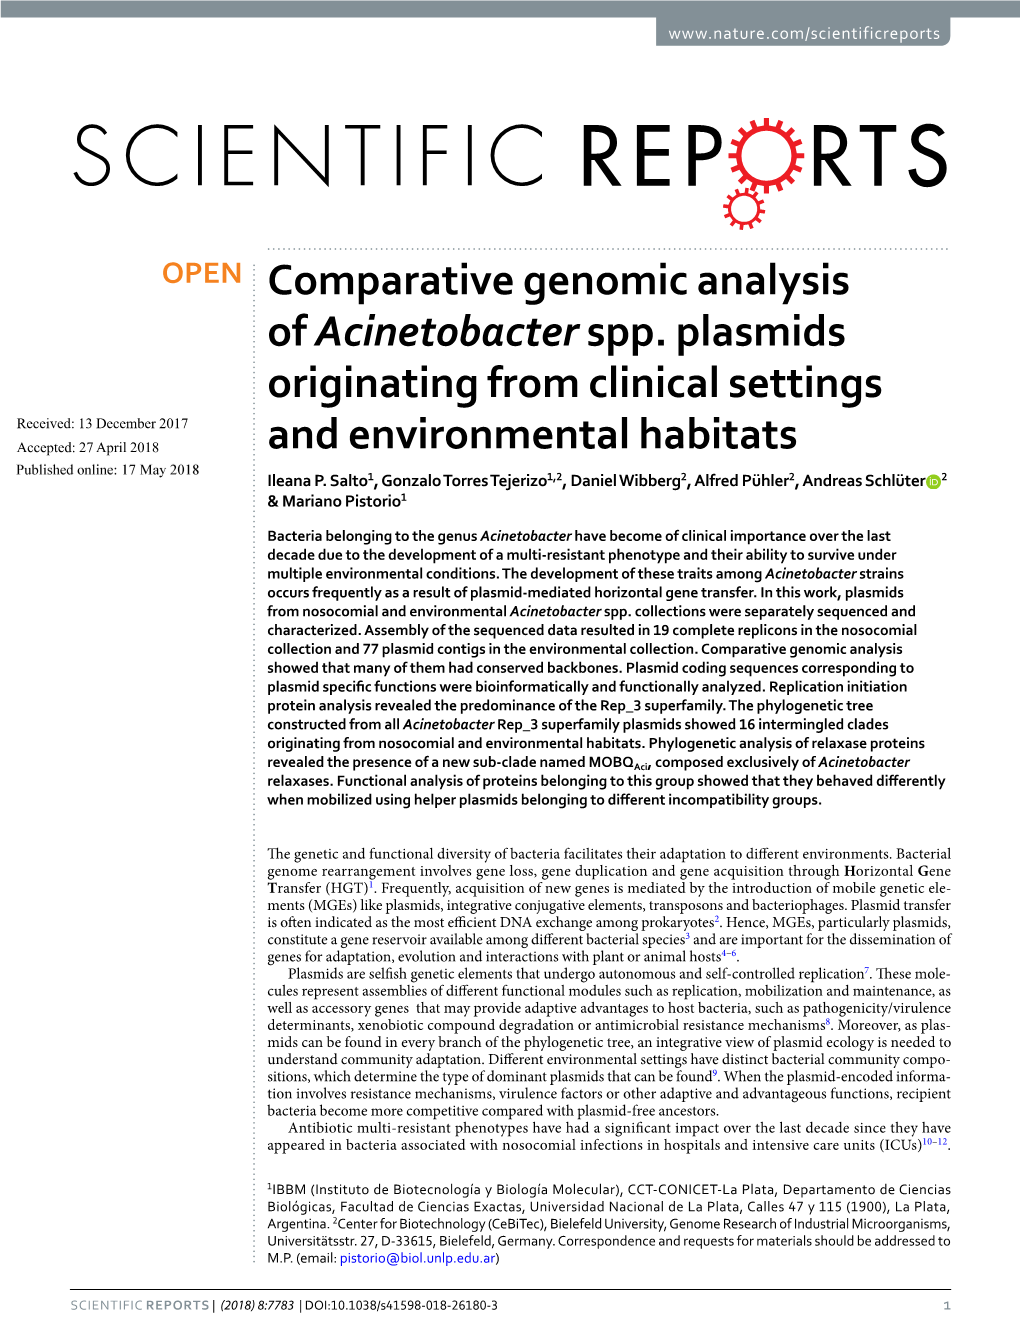 Comparative Genomic Analysis of Acinetobacter Spp. Plasmids